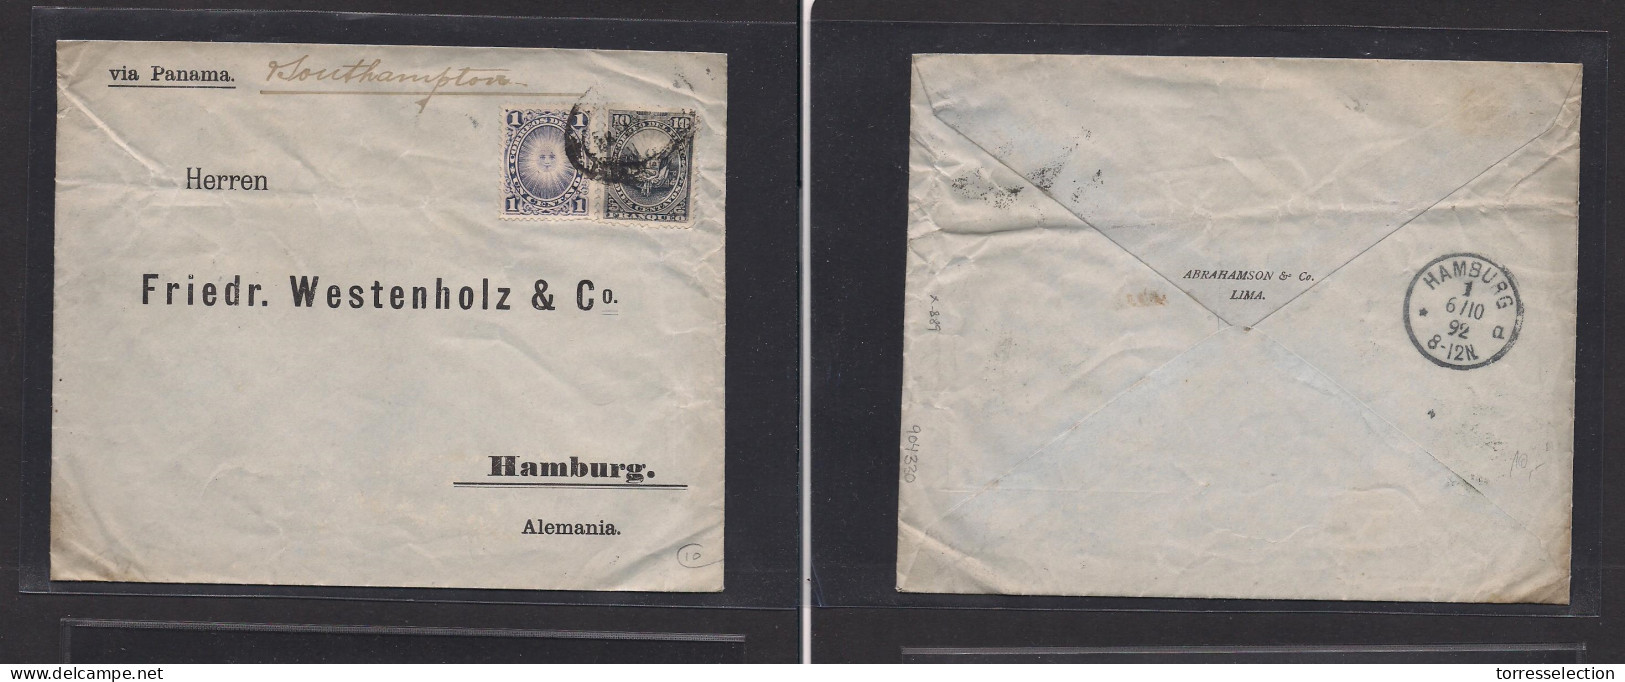 PERU. Peru - Cover - 1892 Lima To Hamburg Germany Fkd Env 11c Rate Via Panama Southampton. Easy Deal. XSALE. - Perú